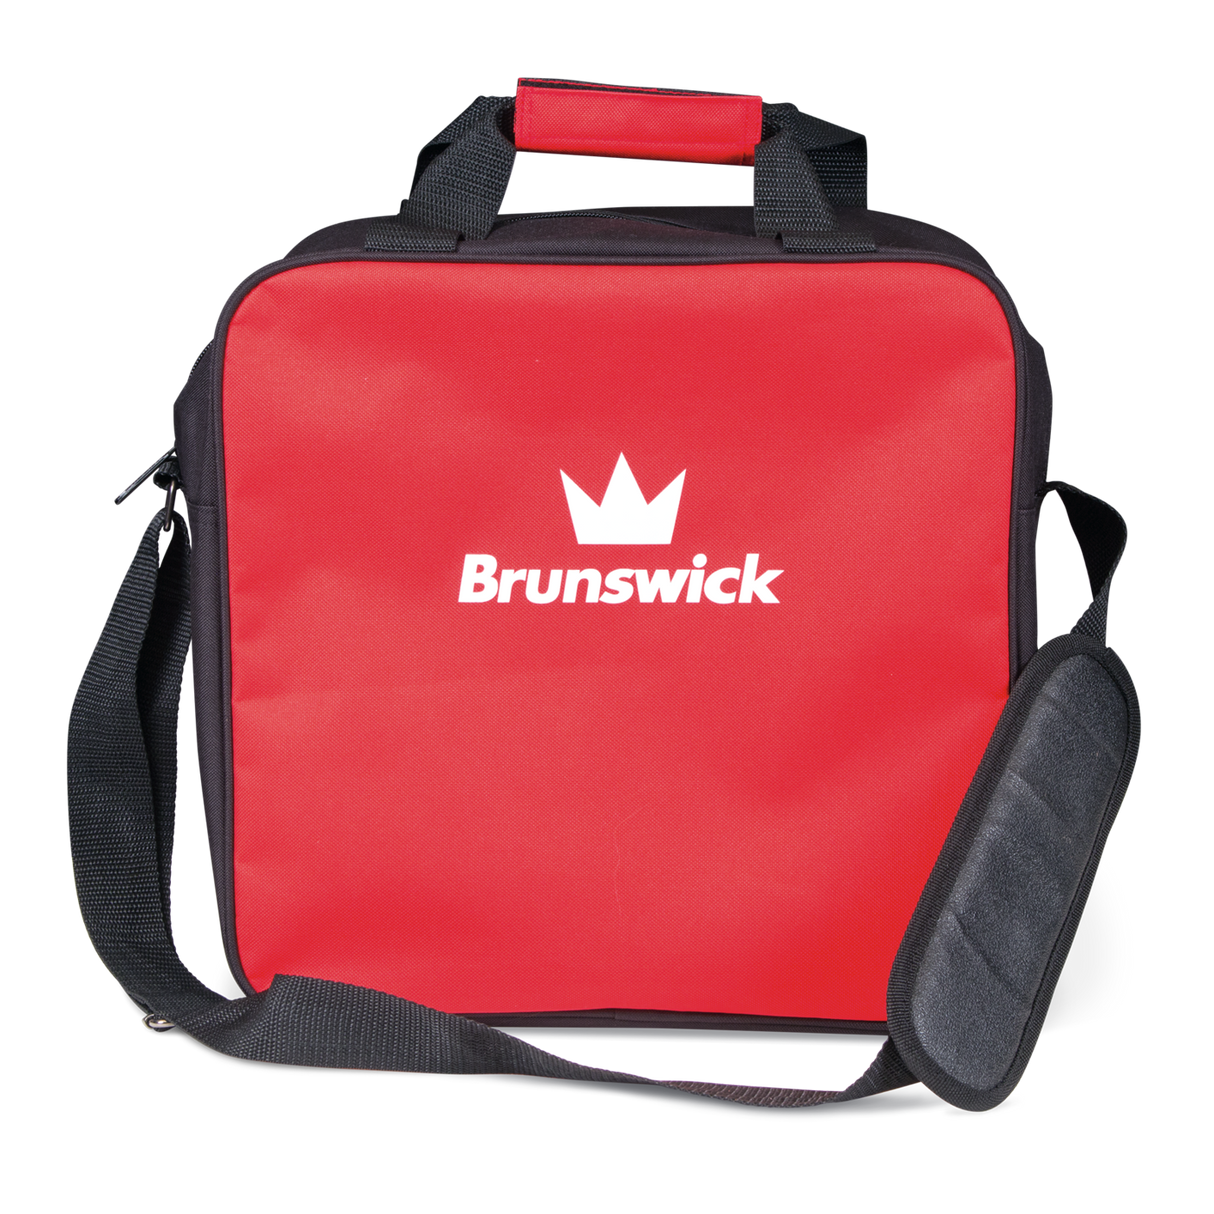 Brunswick Target Zone Single Red Bowling Bag Bowling Bag travel suitcase league tournament play sale discount coupon online pba tour